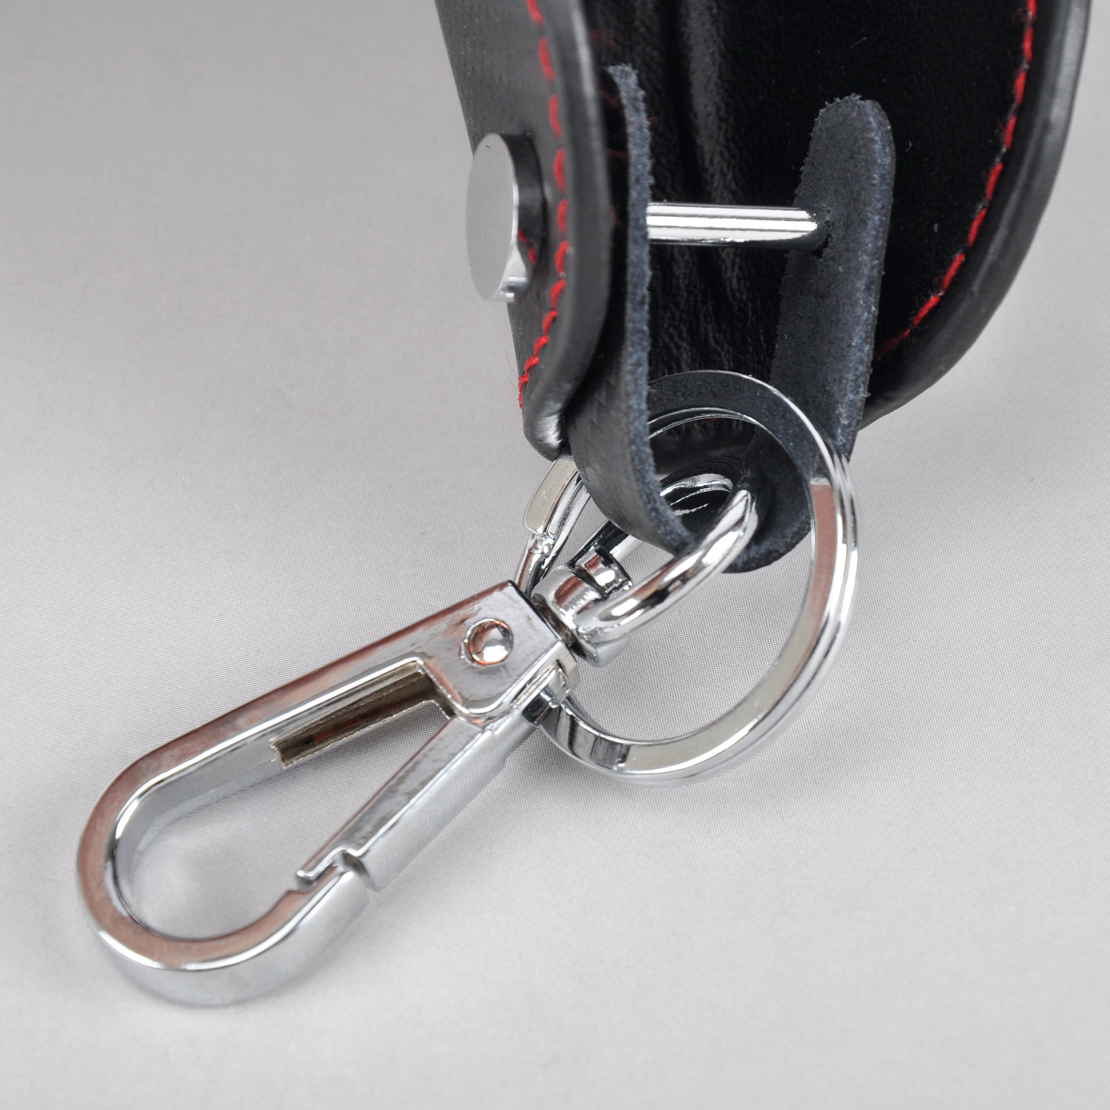 Bmw carbon fiber keychain #3